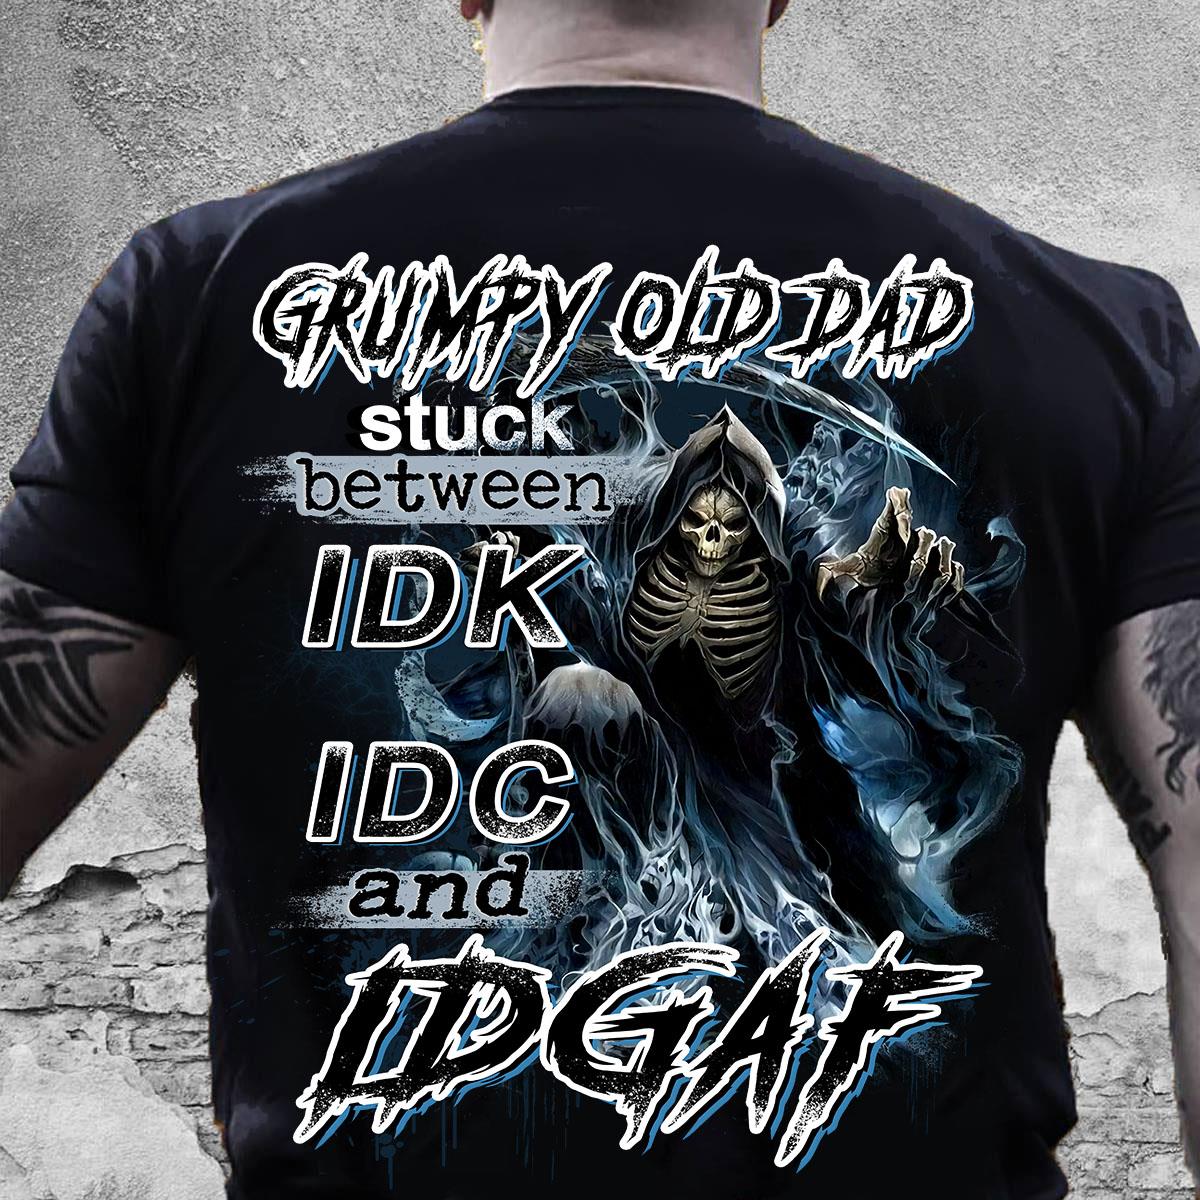 Grumpy old dad stuck between IDK IDC and IDGAF - Black evil